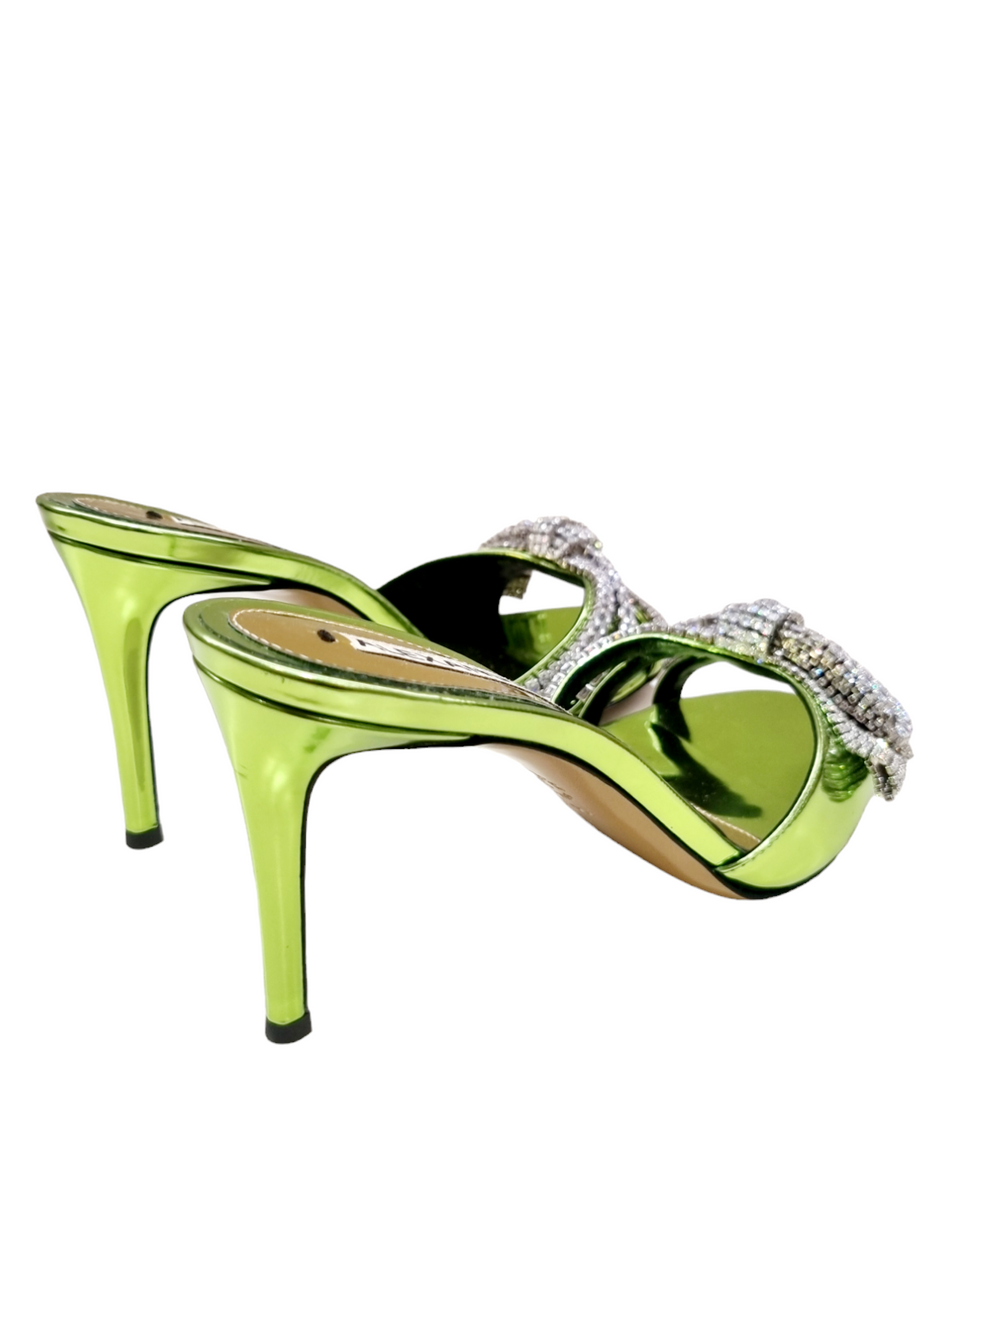 Mandy Lime Crystal Detail Mules - Alexandre Vauthier - Liberty Shoes Australia